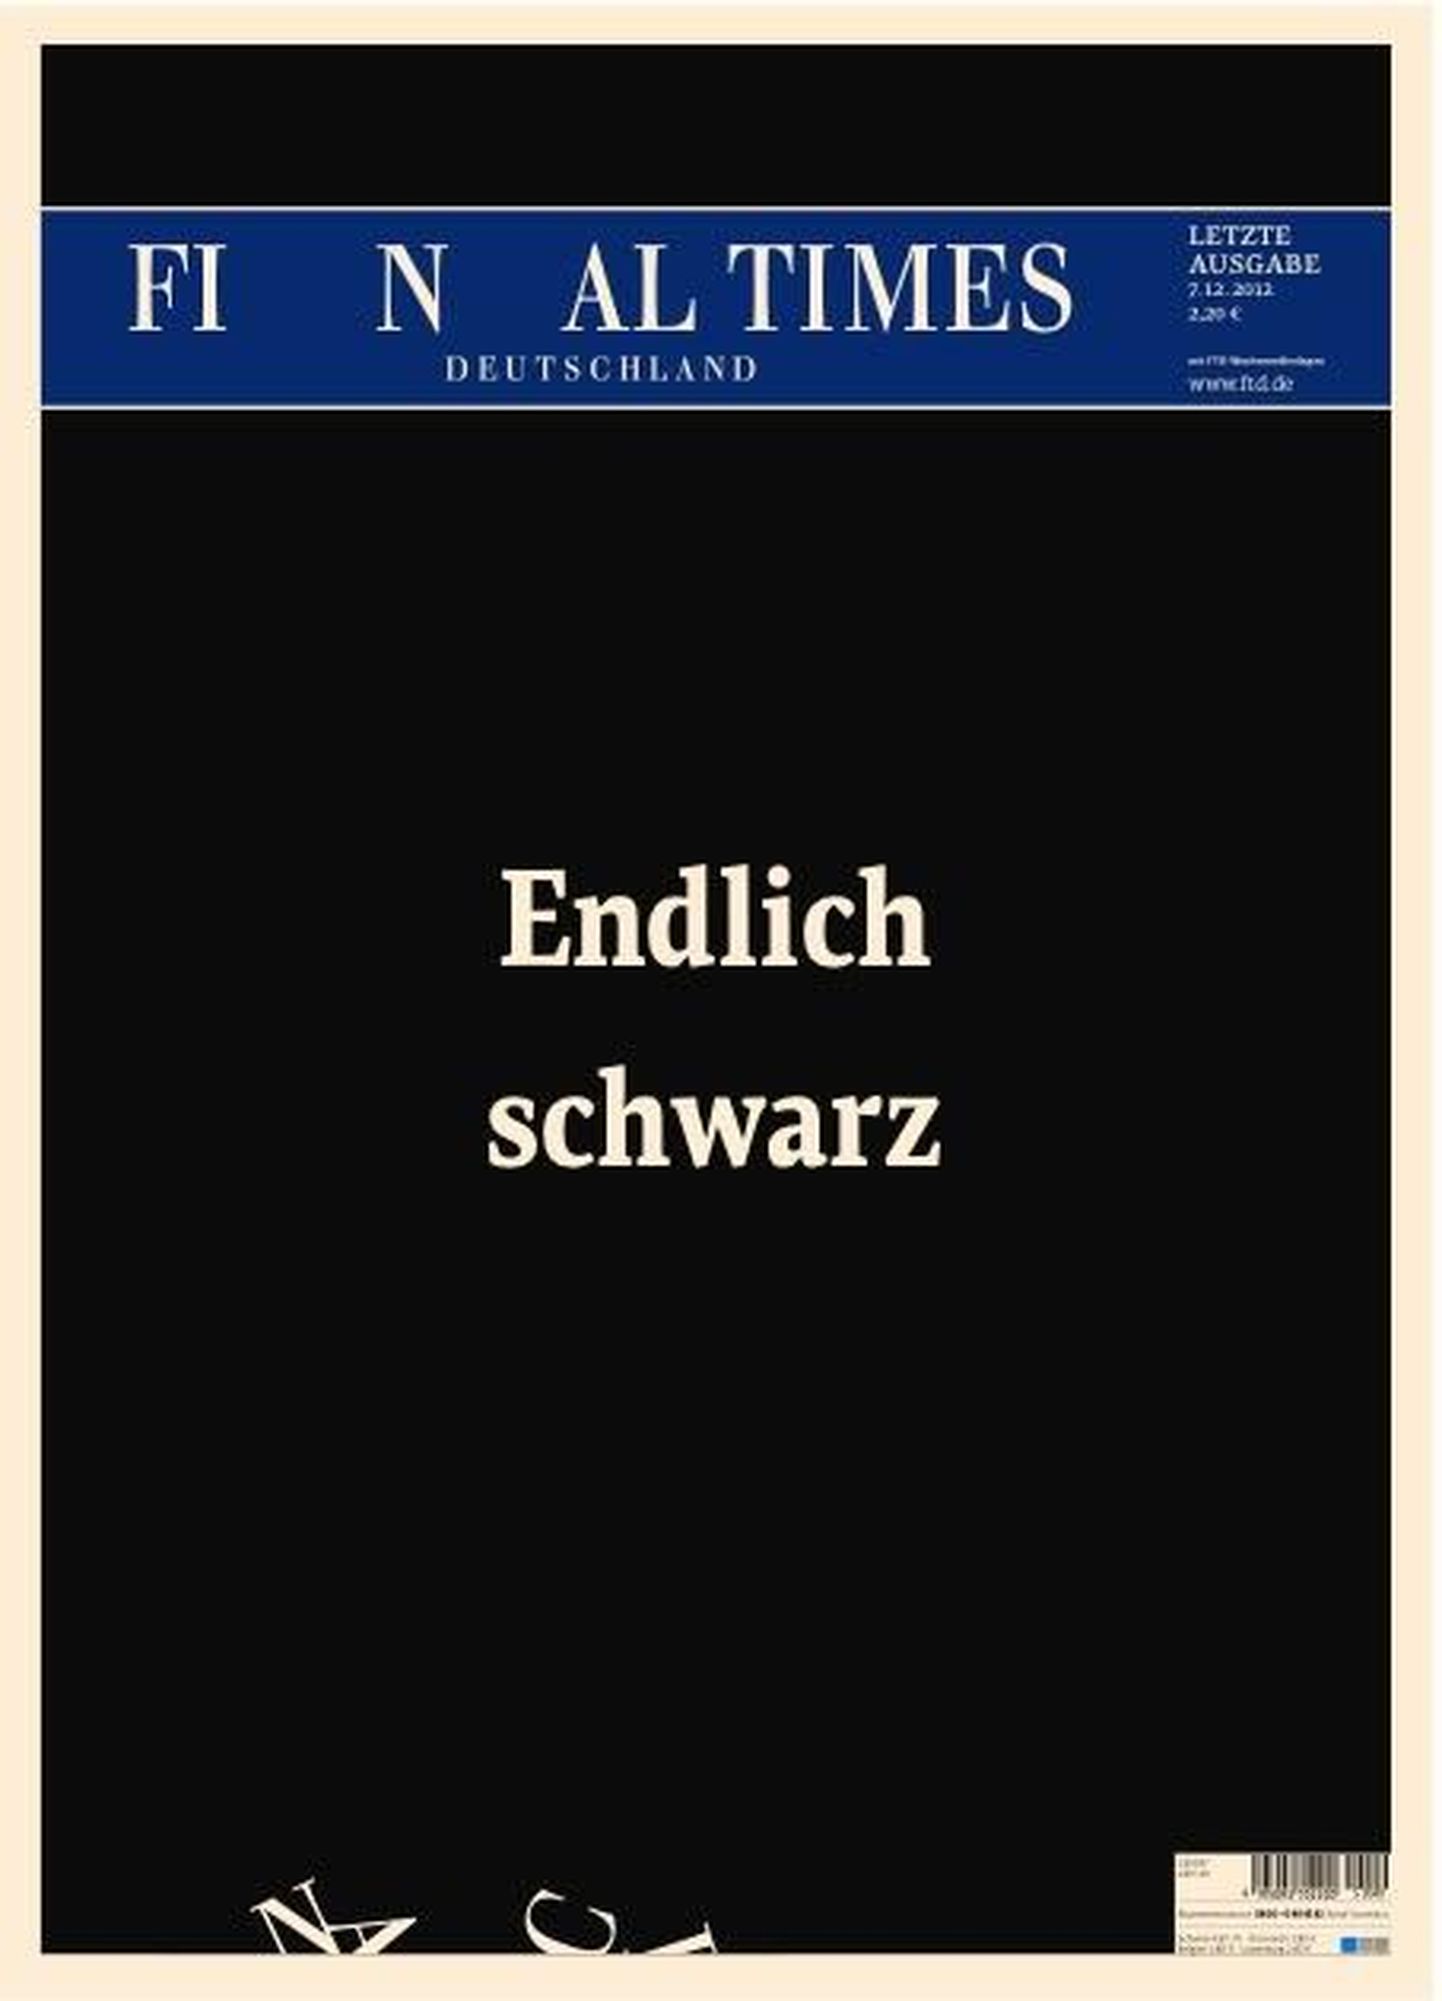 Financial Times Deutschlandi viimane esikülg.